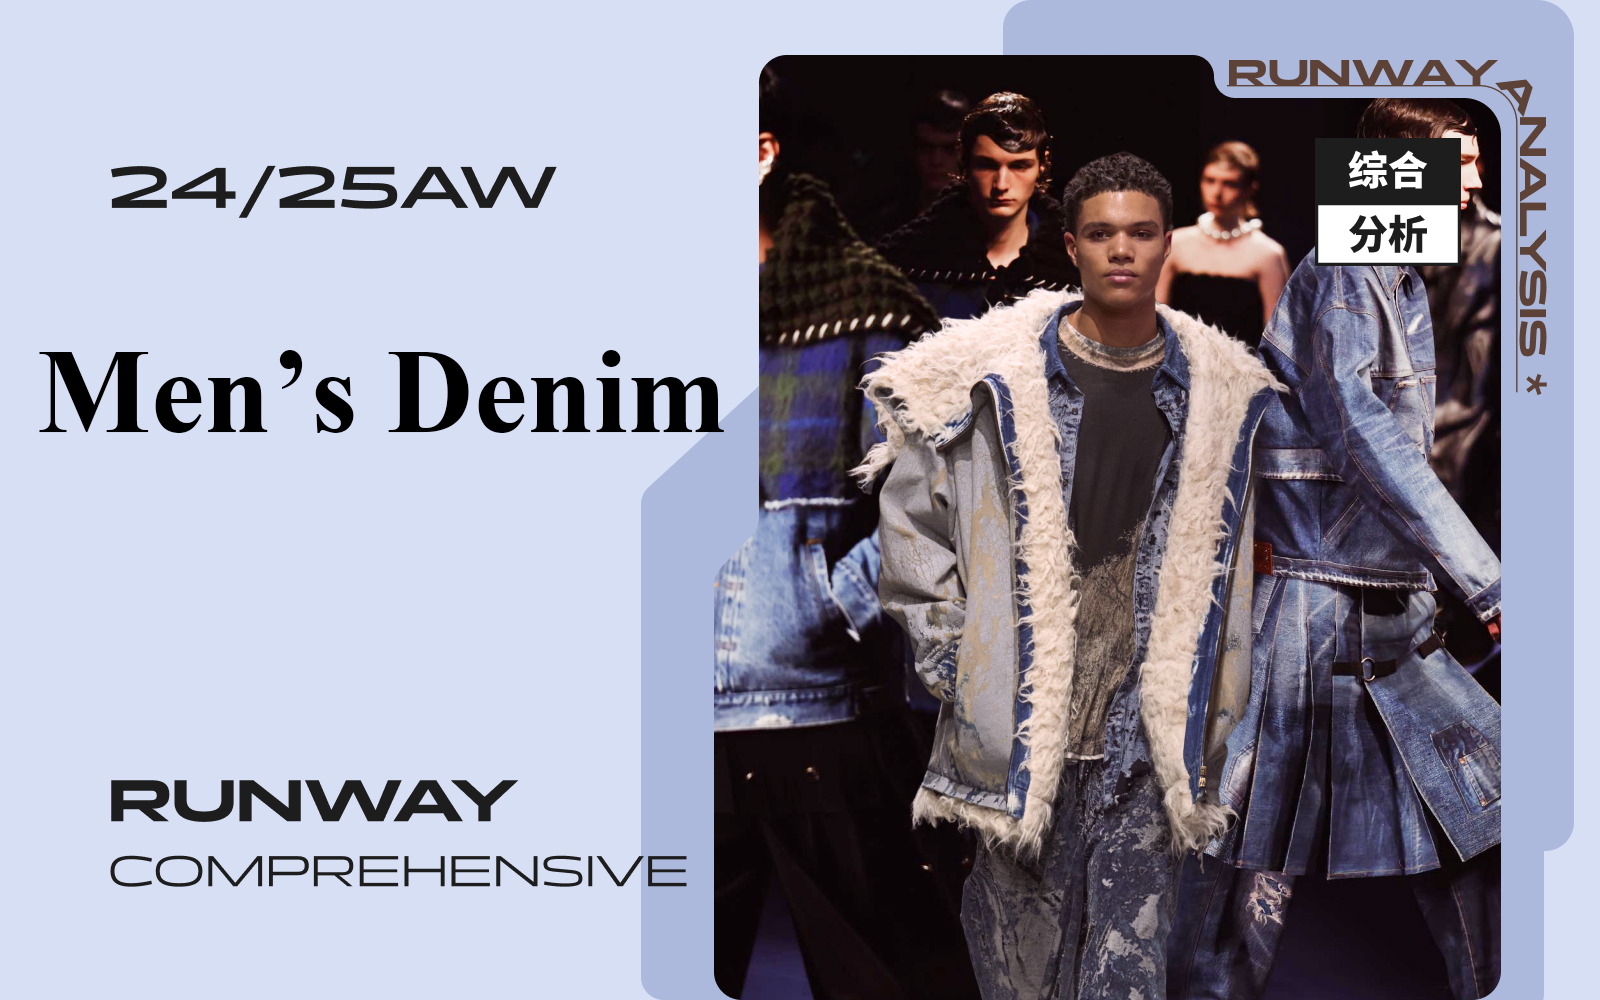 Retro Fashion -- The Comprehensive Runway Analysis of Men's Denim (Part One)